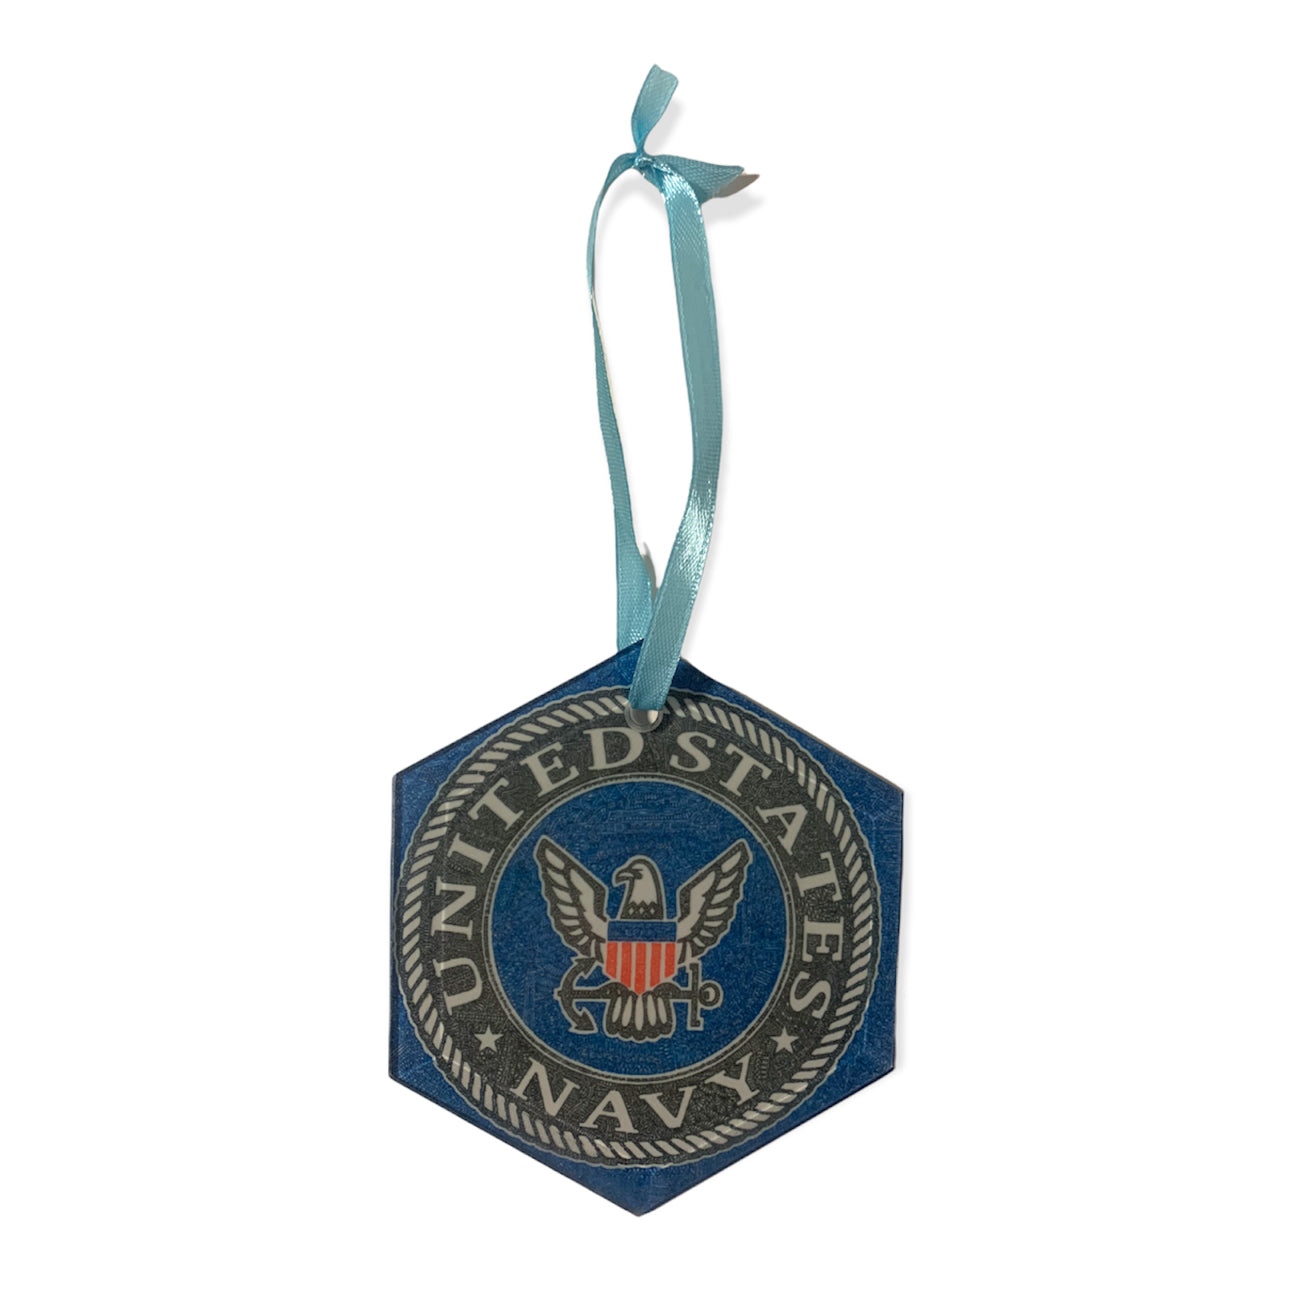 Glass Ornaments - U.S. Navy